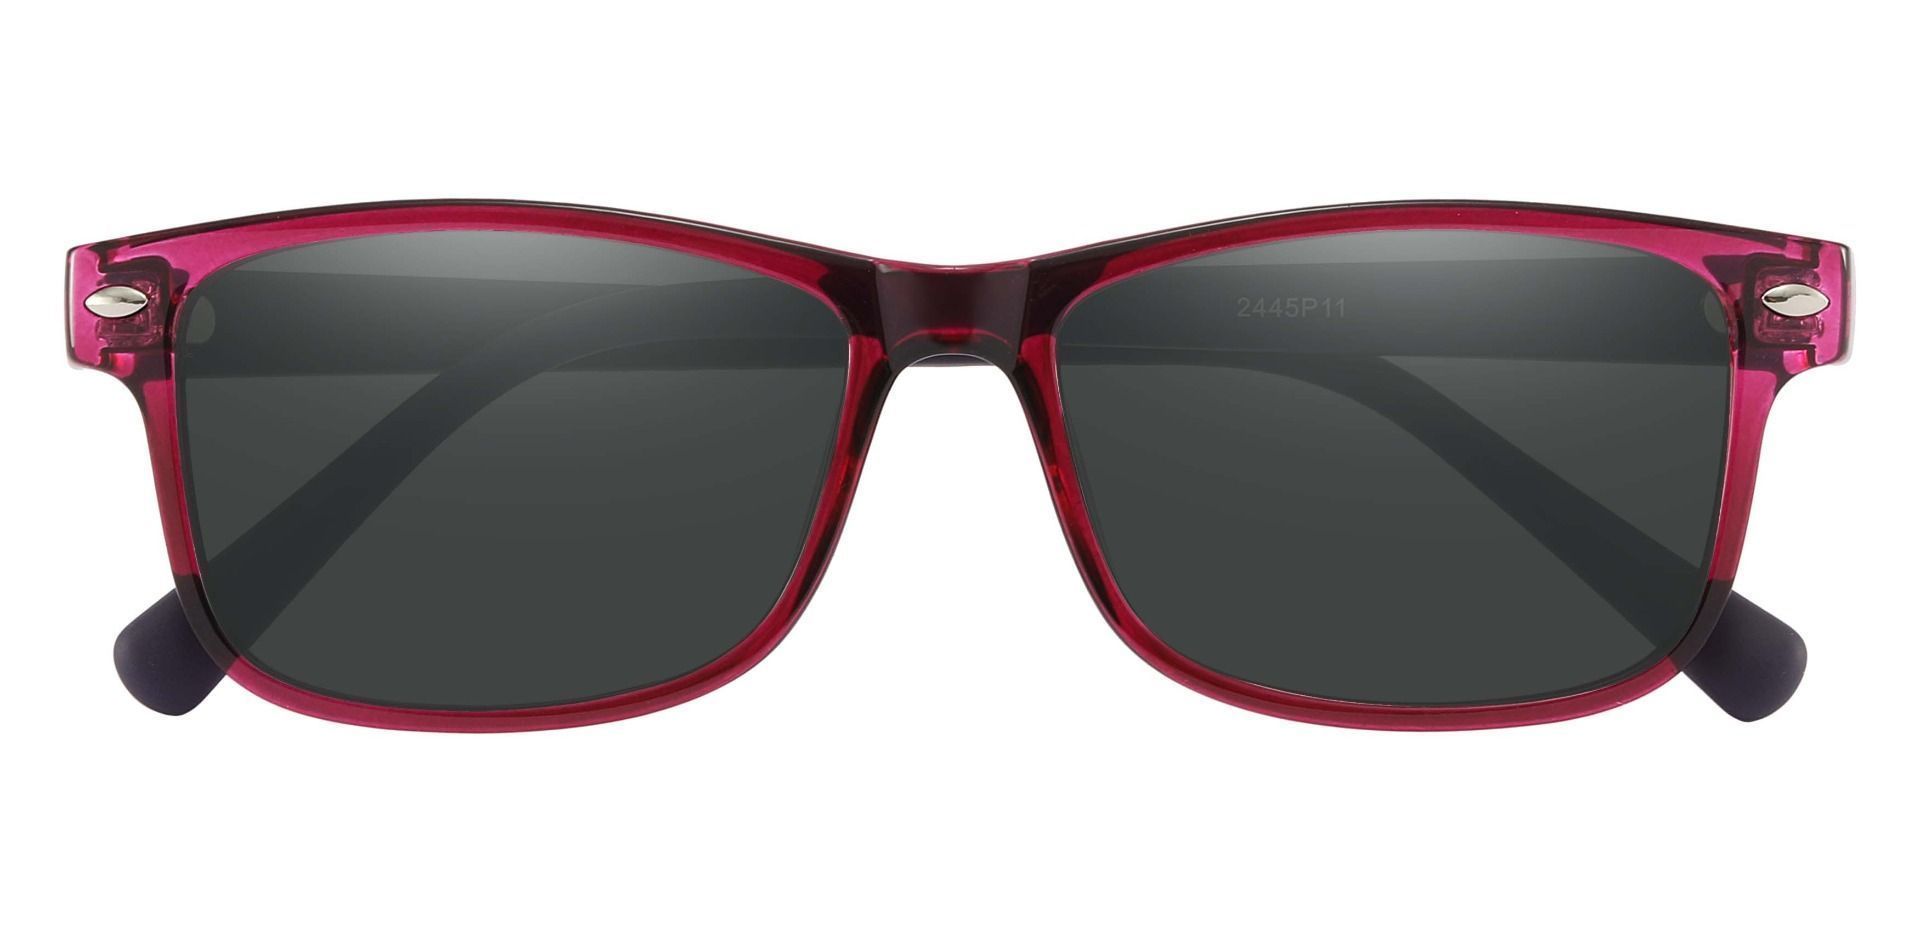 Minerva Rectangle Reading Sunglasses - Purple Frame With Gray Lenses